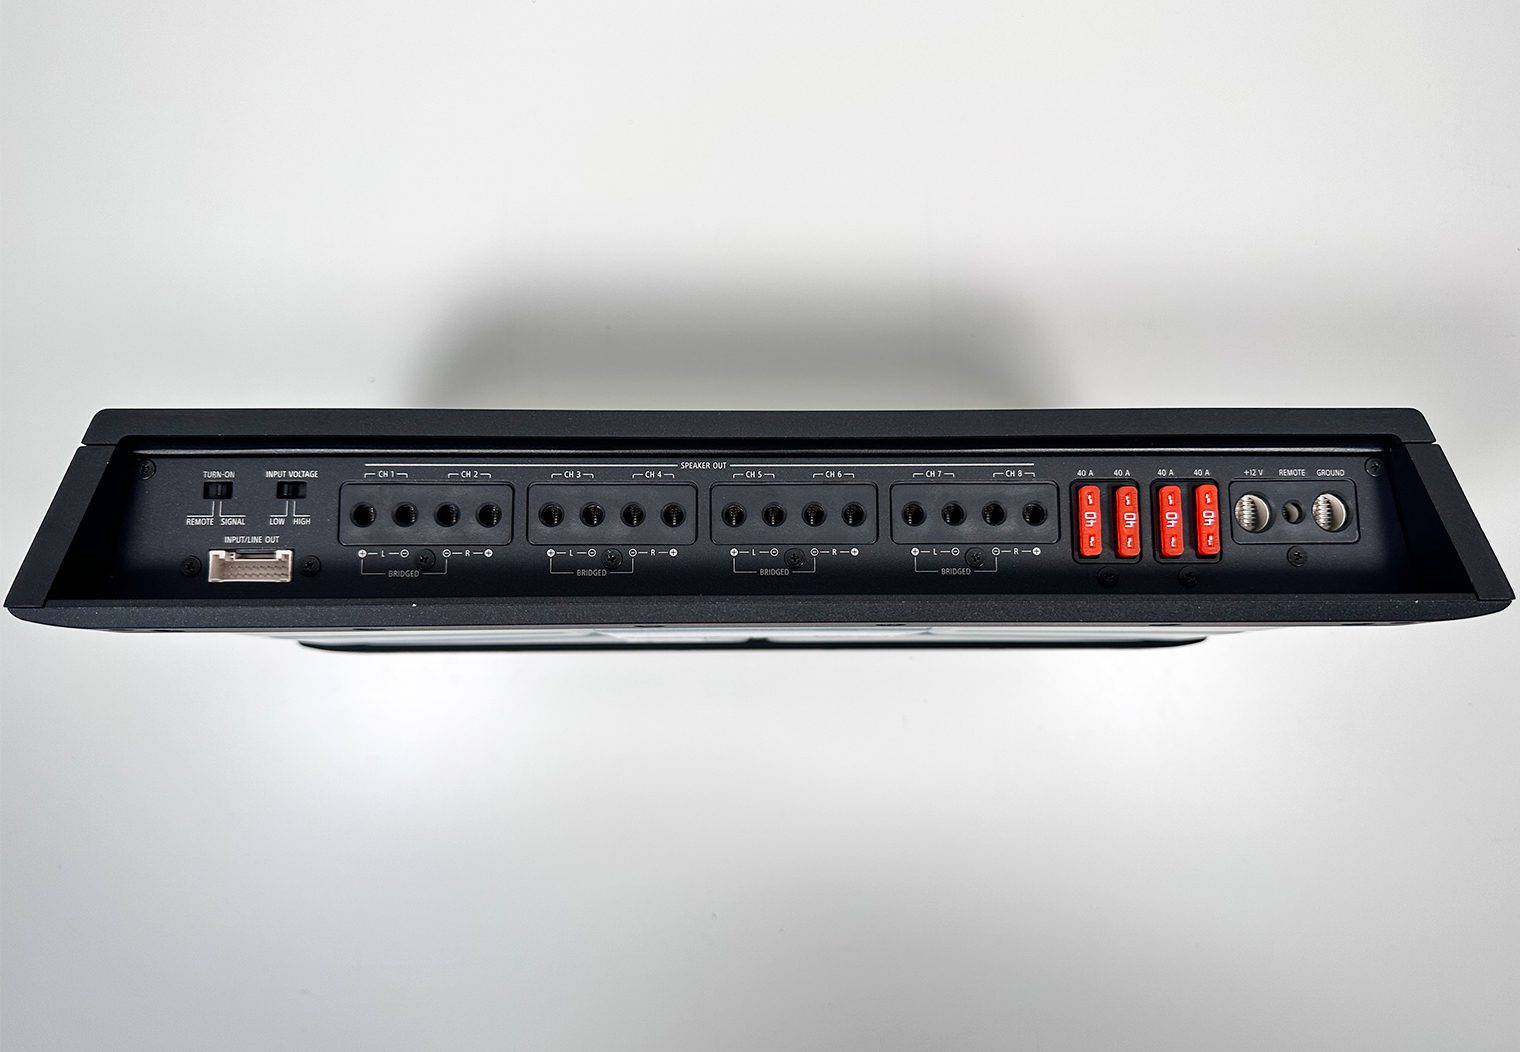 Sony XM-8ES input/output panel